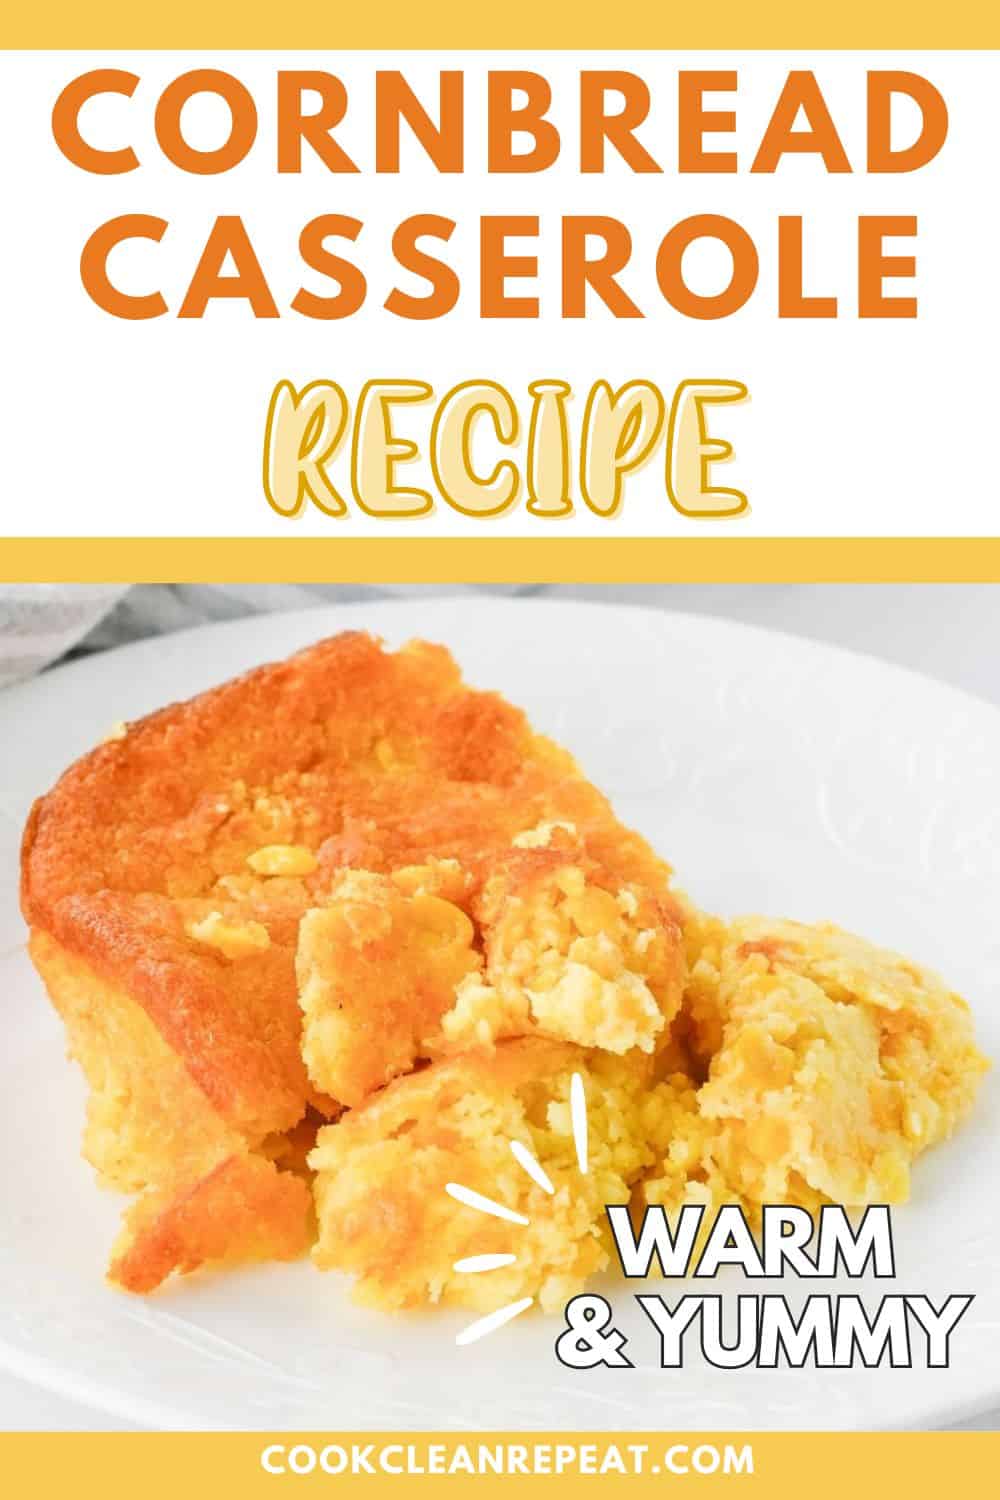 Pinterest image made for Cornbread Casserole Recipe.